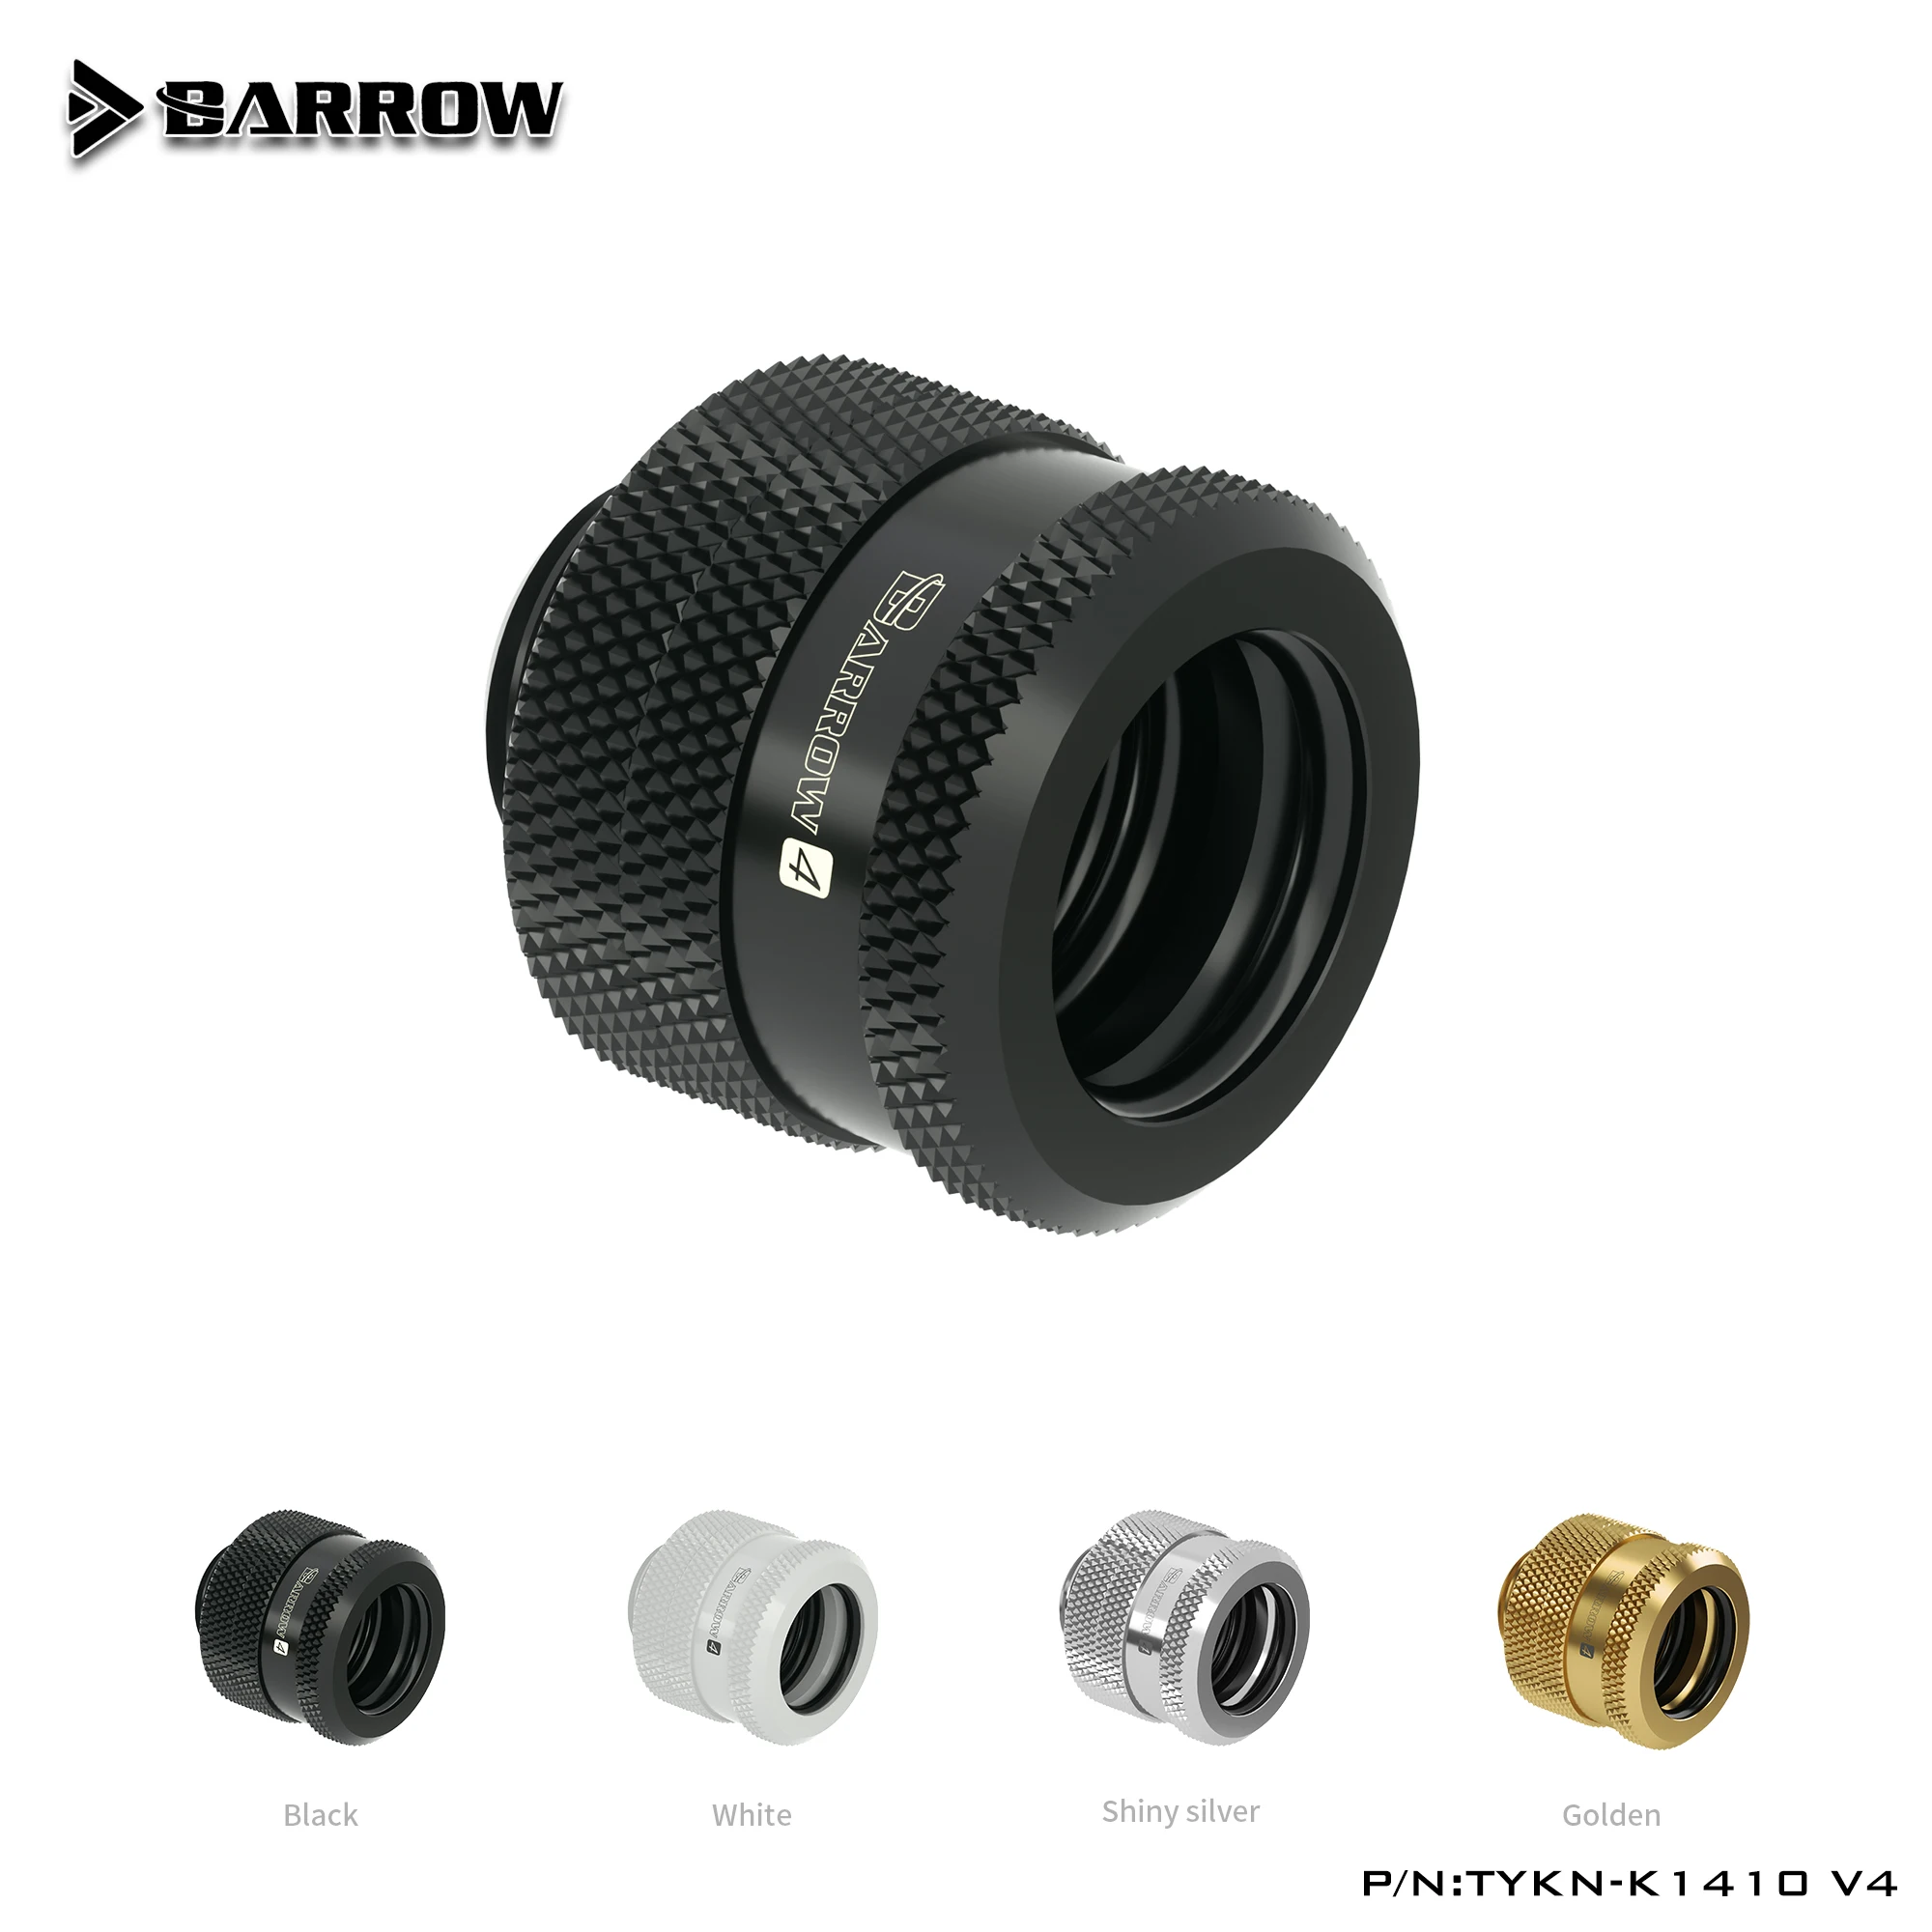 

Barrow TYKN-K1410V4, od 14 мм фитинг для жесткой трубки, G1/4 адаптера для жесткой трубки od14 мм, черный, серебристый, белый, золотой